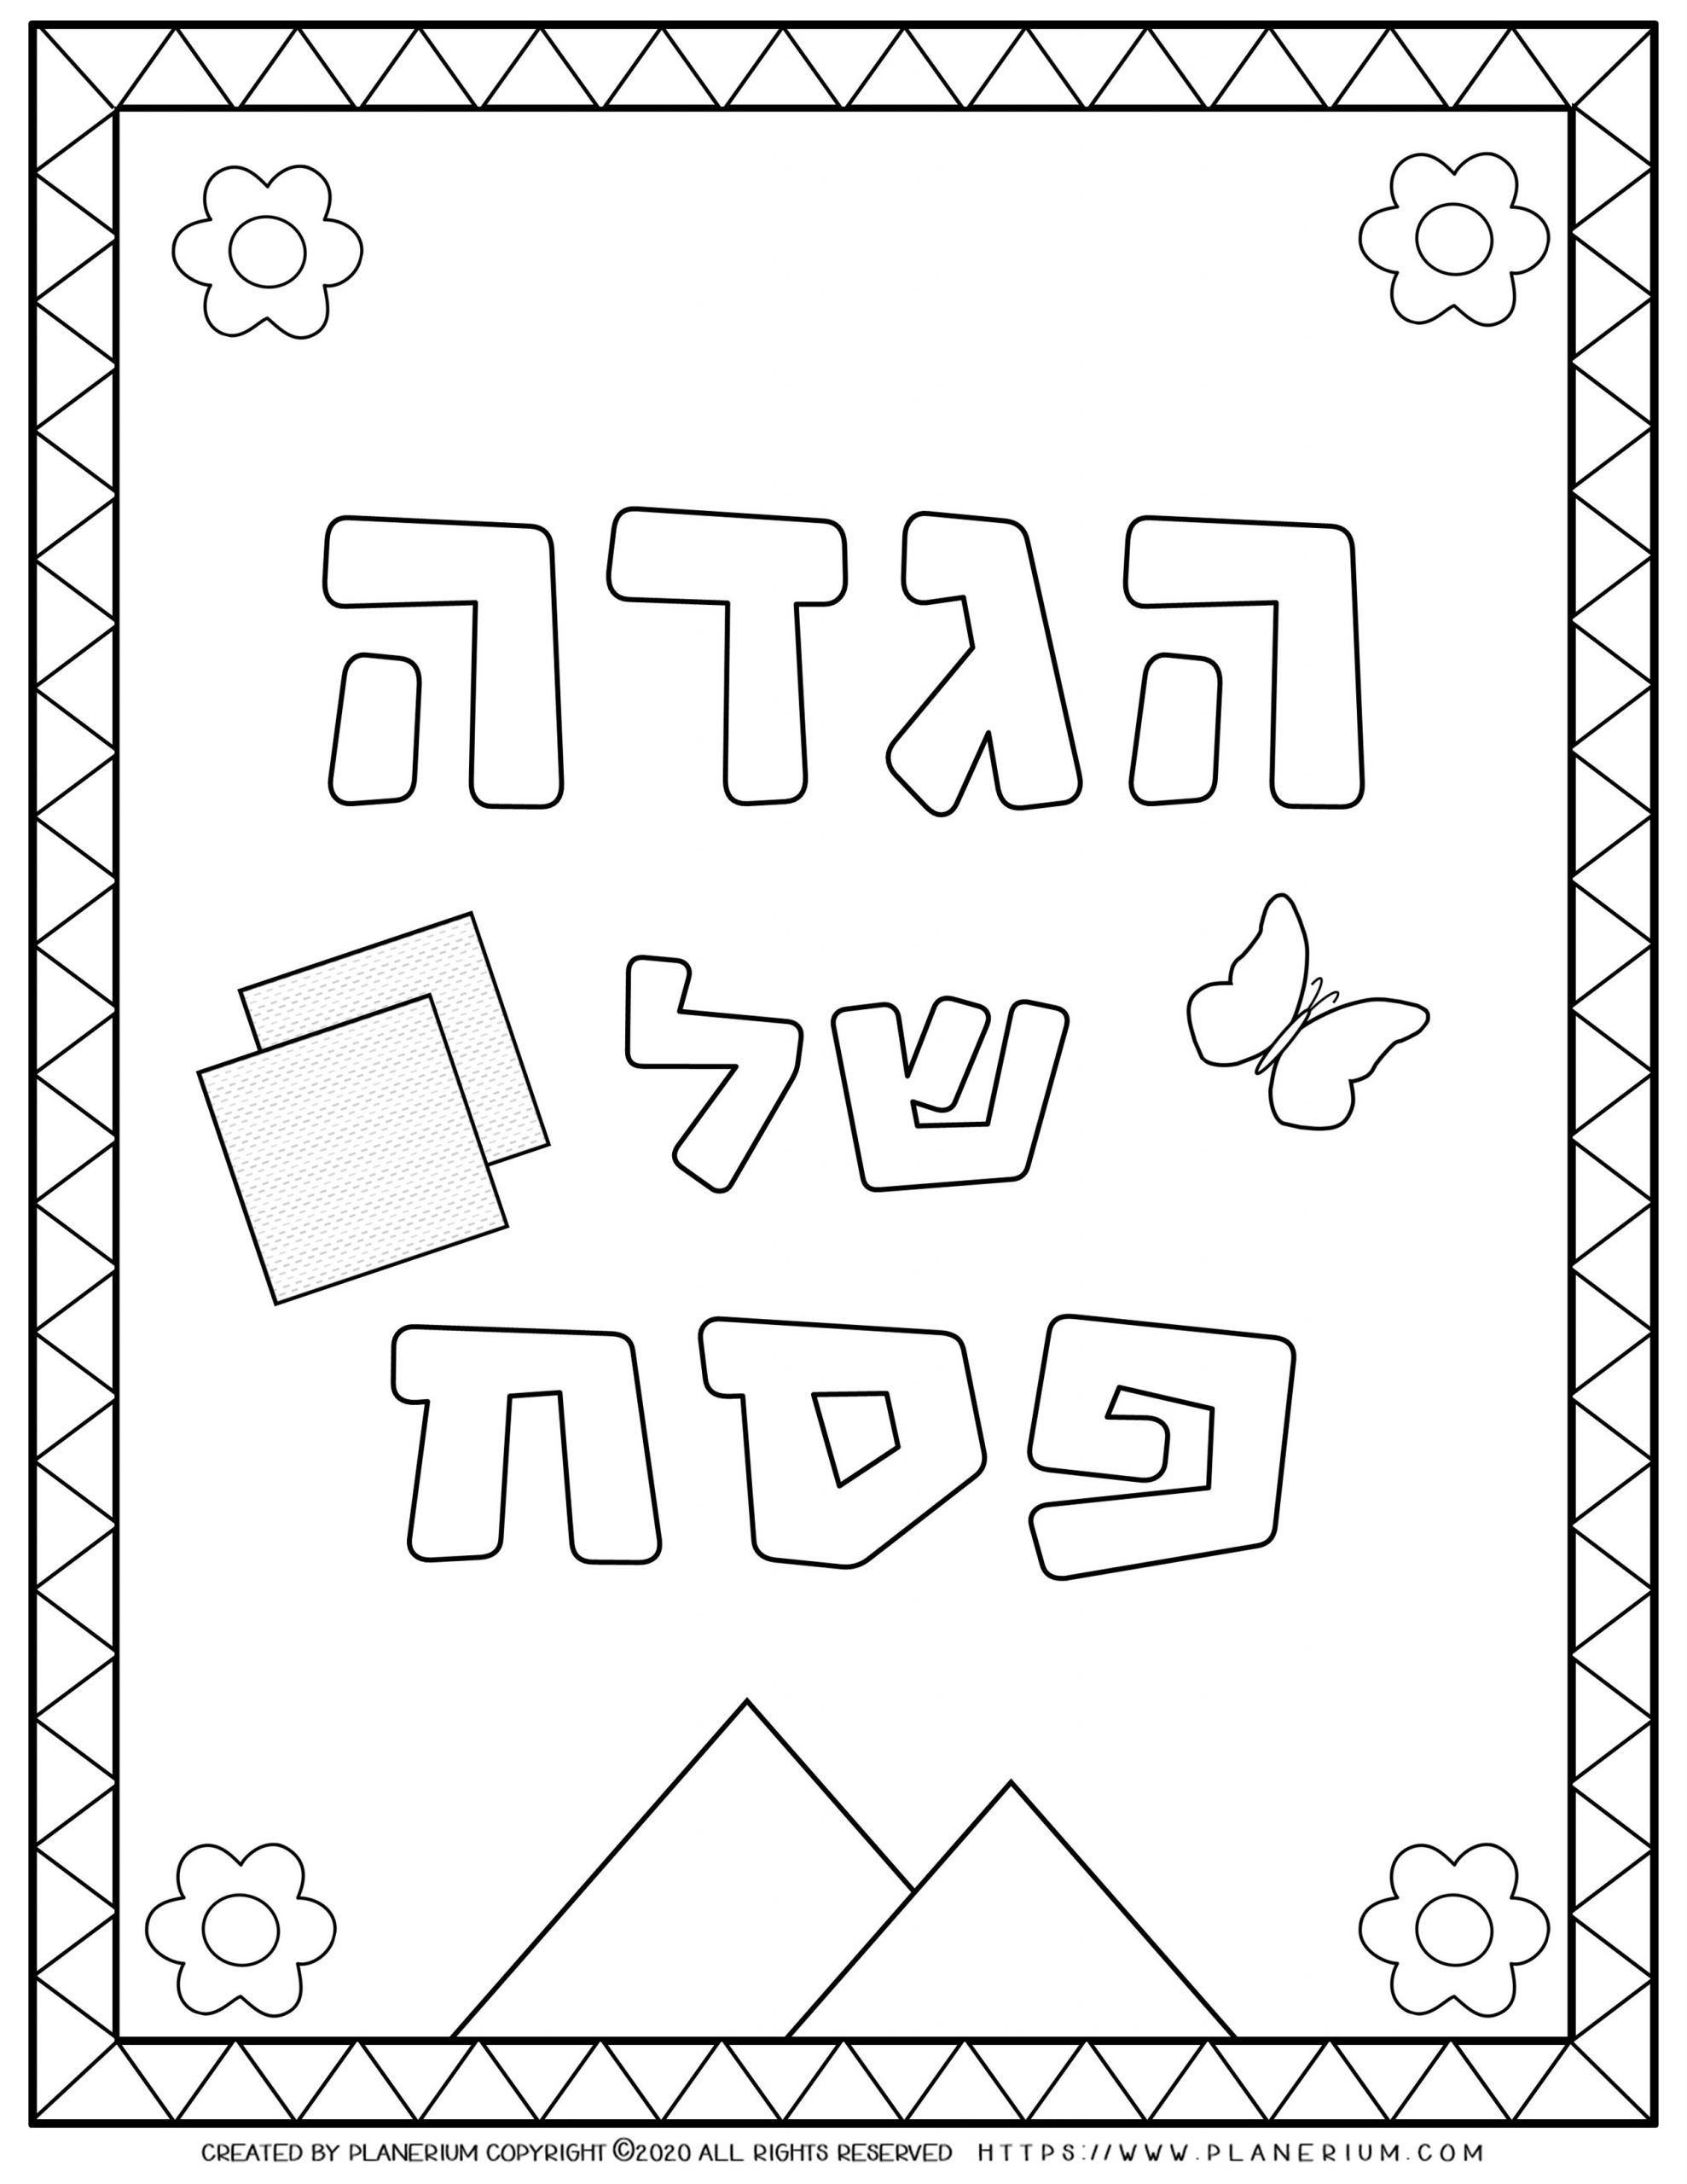 Download Passover - Coloring Page - Haggadah Book Cover in Hebrew | Planerium